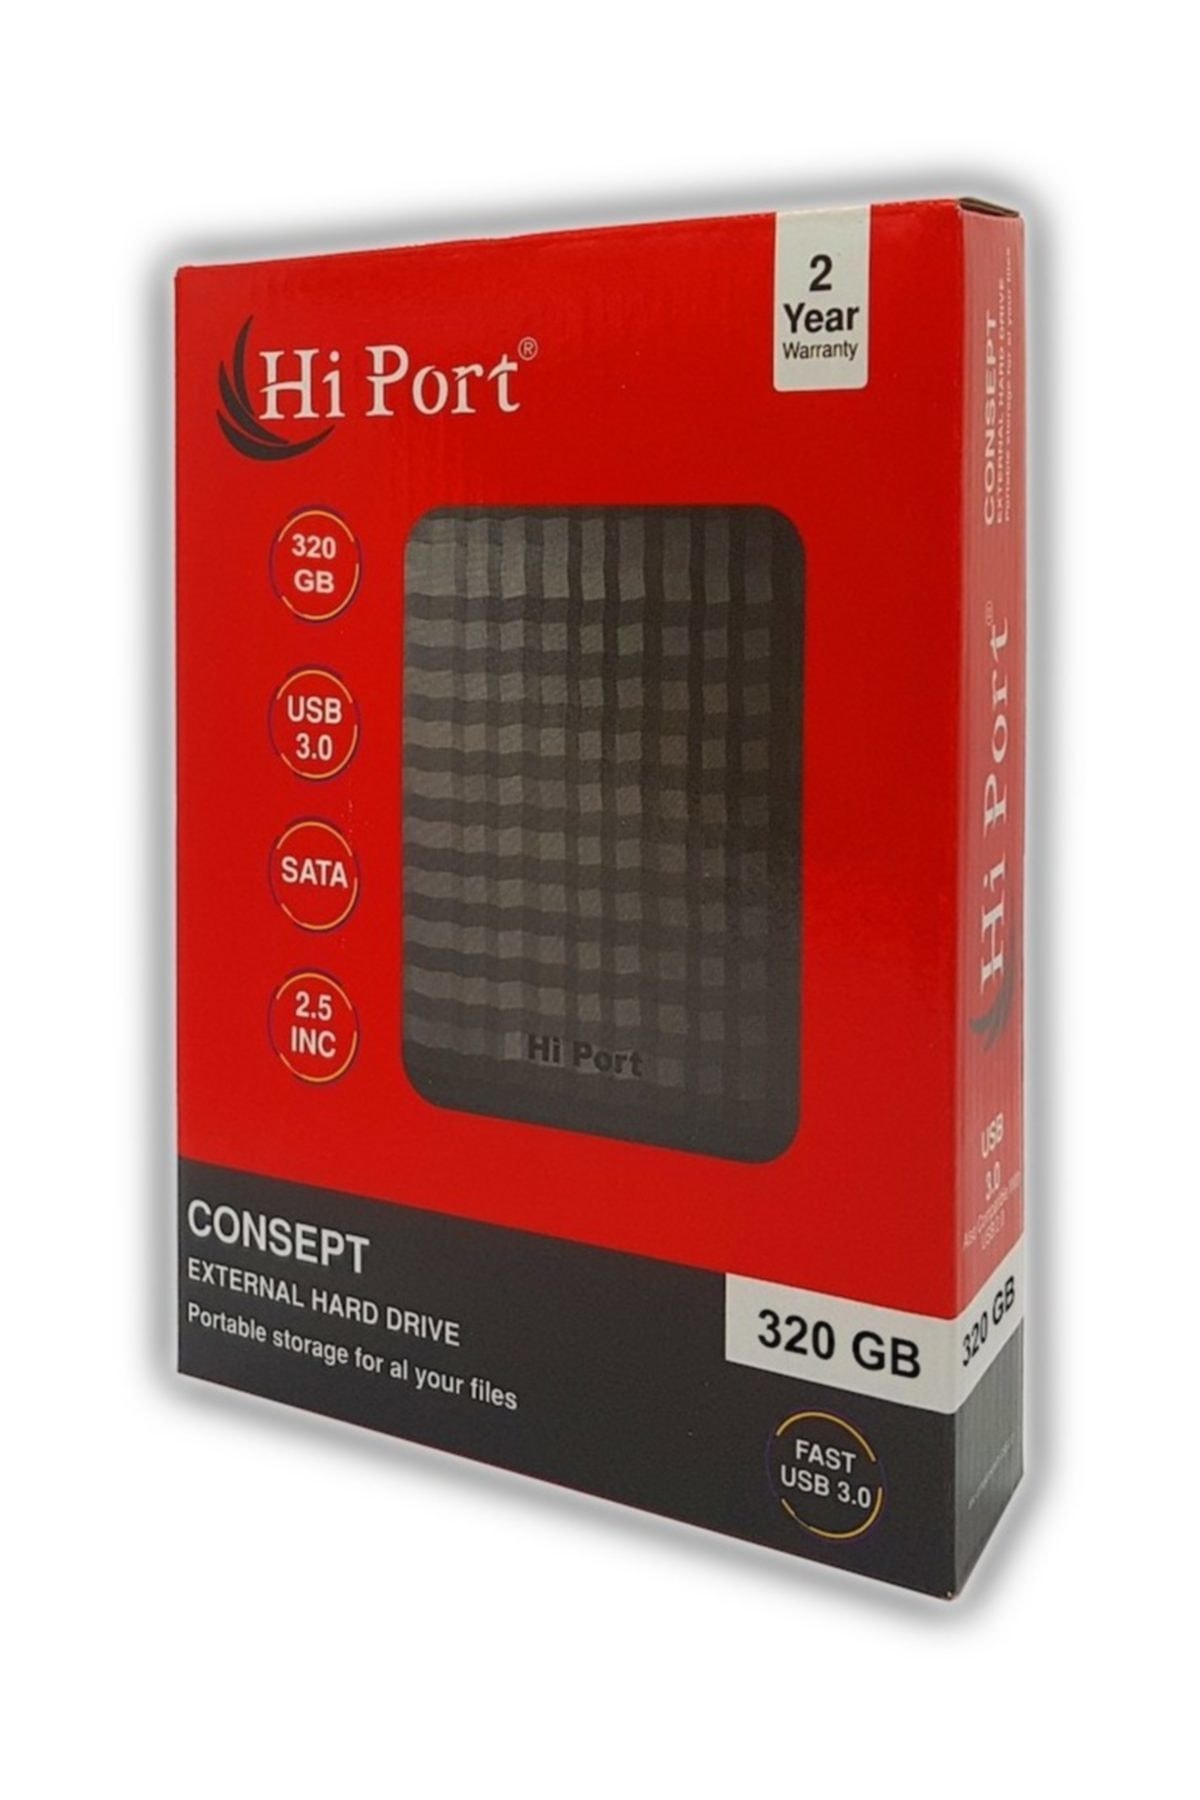 http://www.gurnetbilisim.com/img/urun/Hi Port Consept 320 GB 2.5- USB 3.0 Harici Taşınabilir Disk.jpg